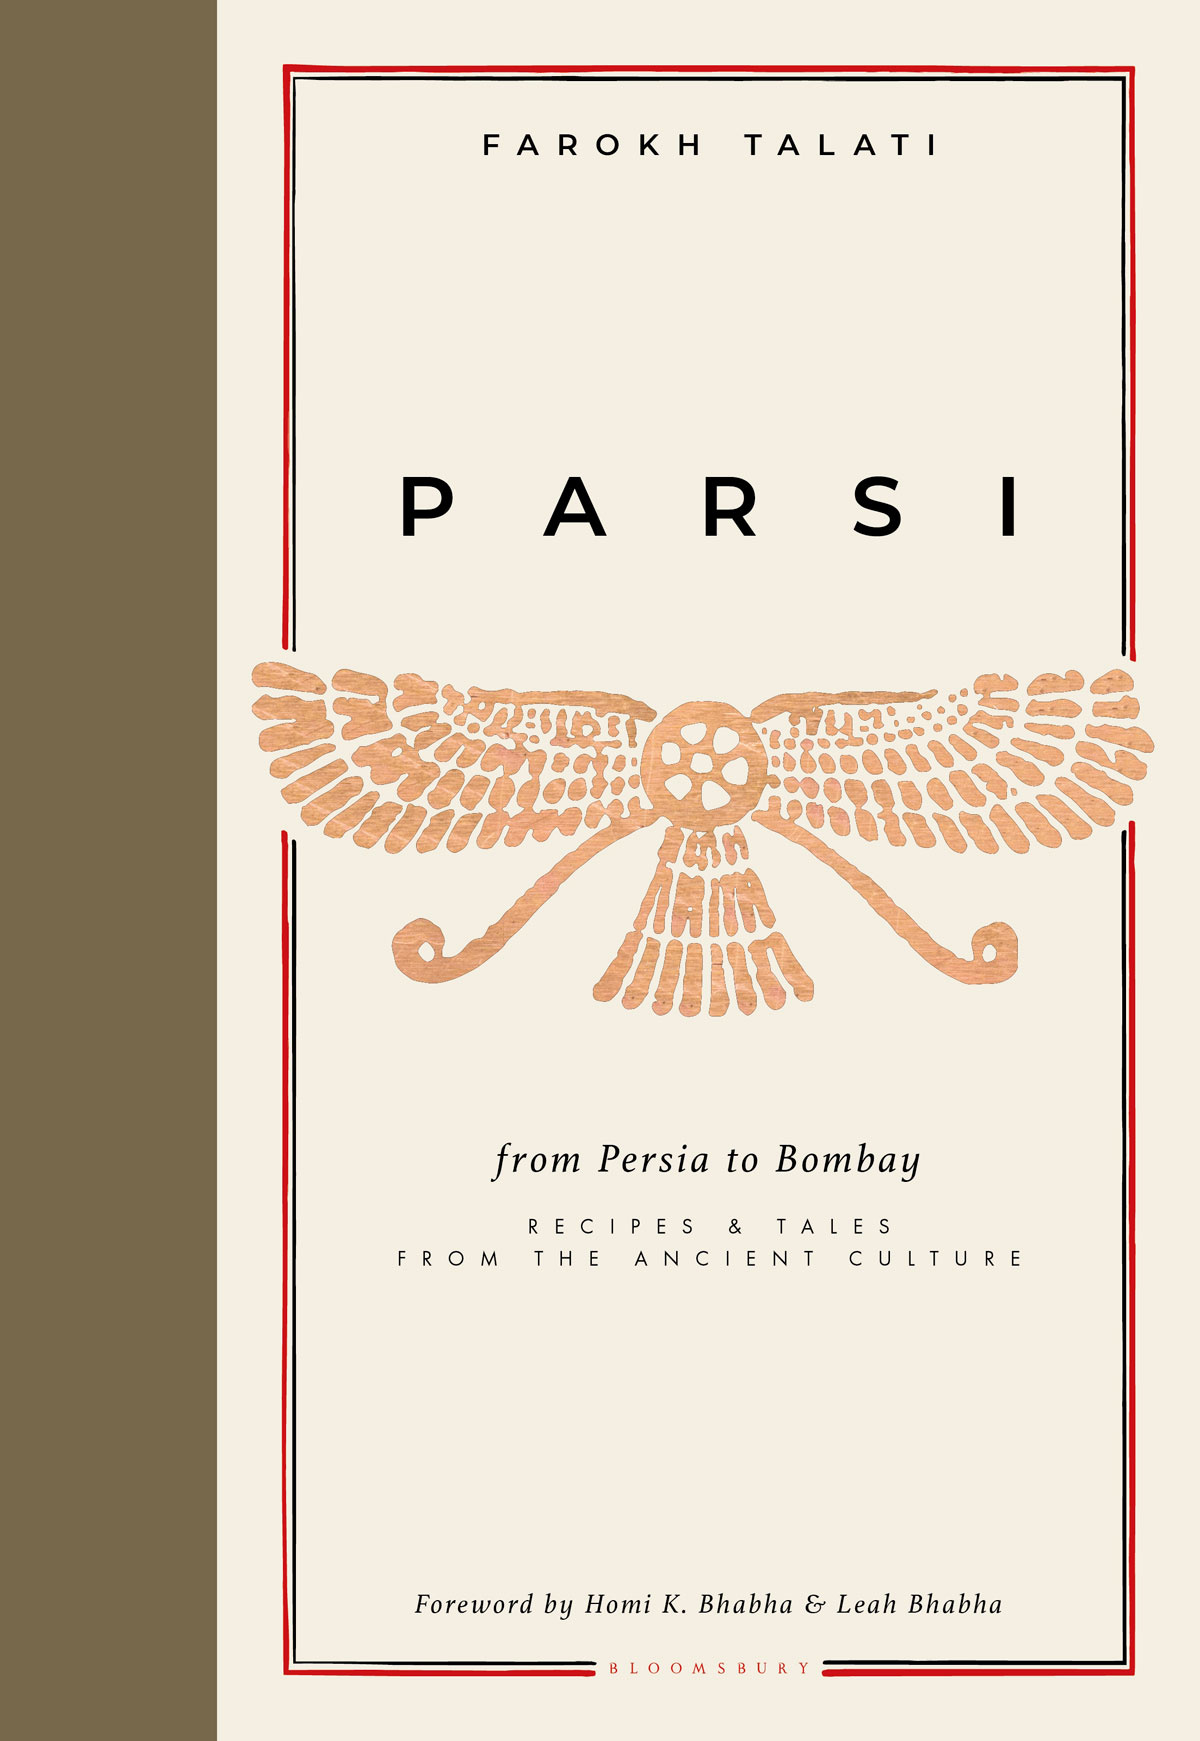 Book cover of Parsi by Farokh Talati